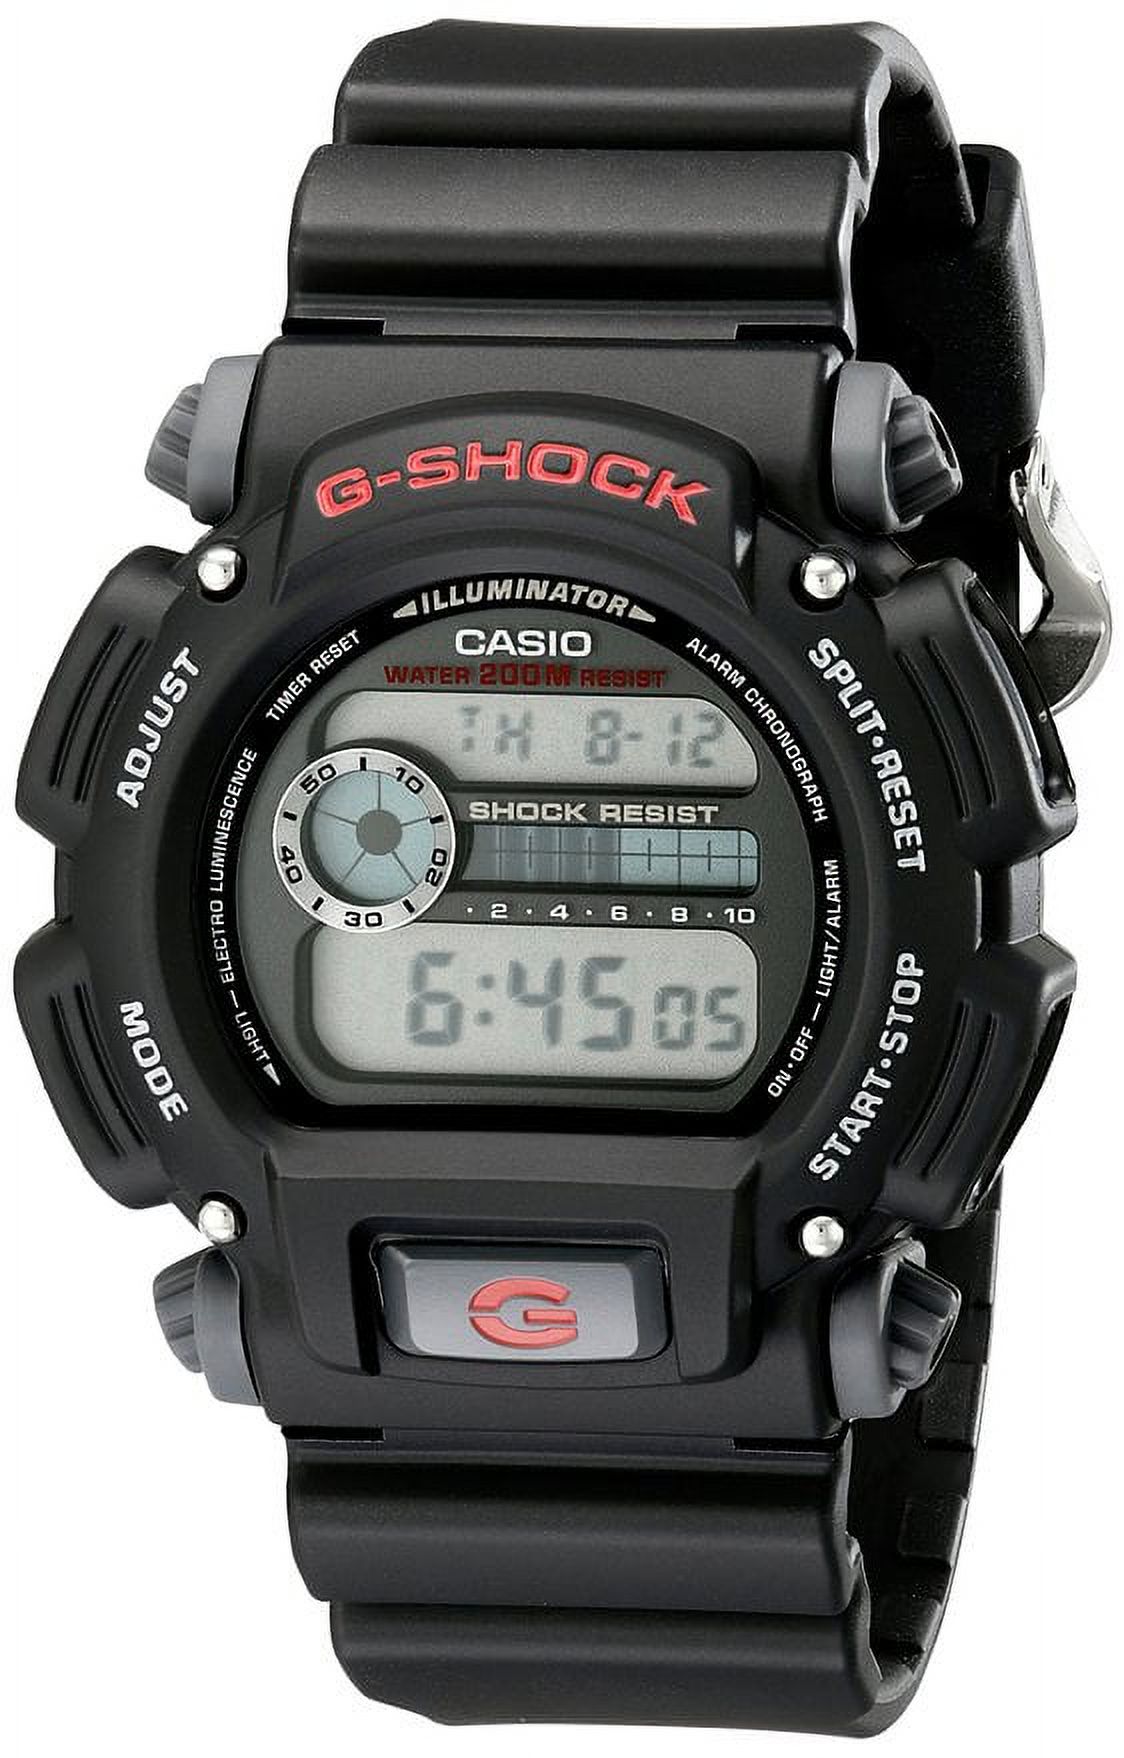 Casio Men's Classic G-Shock Black Illuminator Resin Digital Chronograph Watch - image 1 of 3